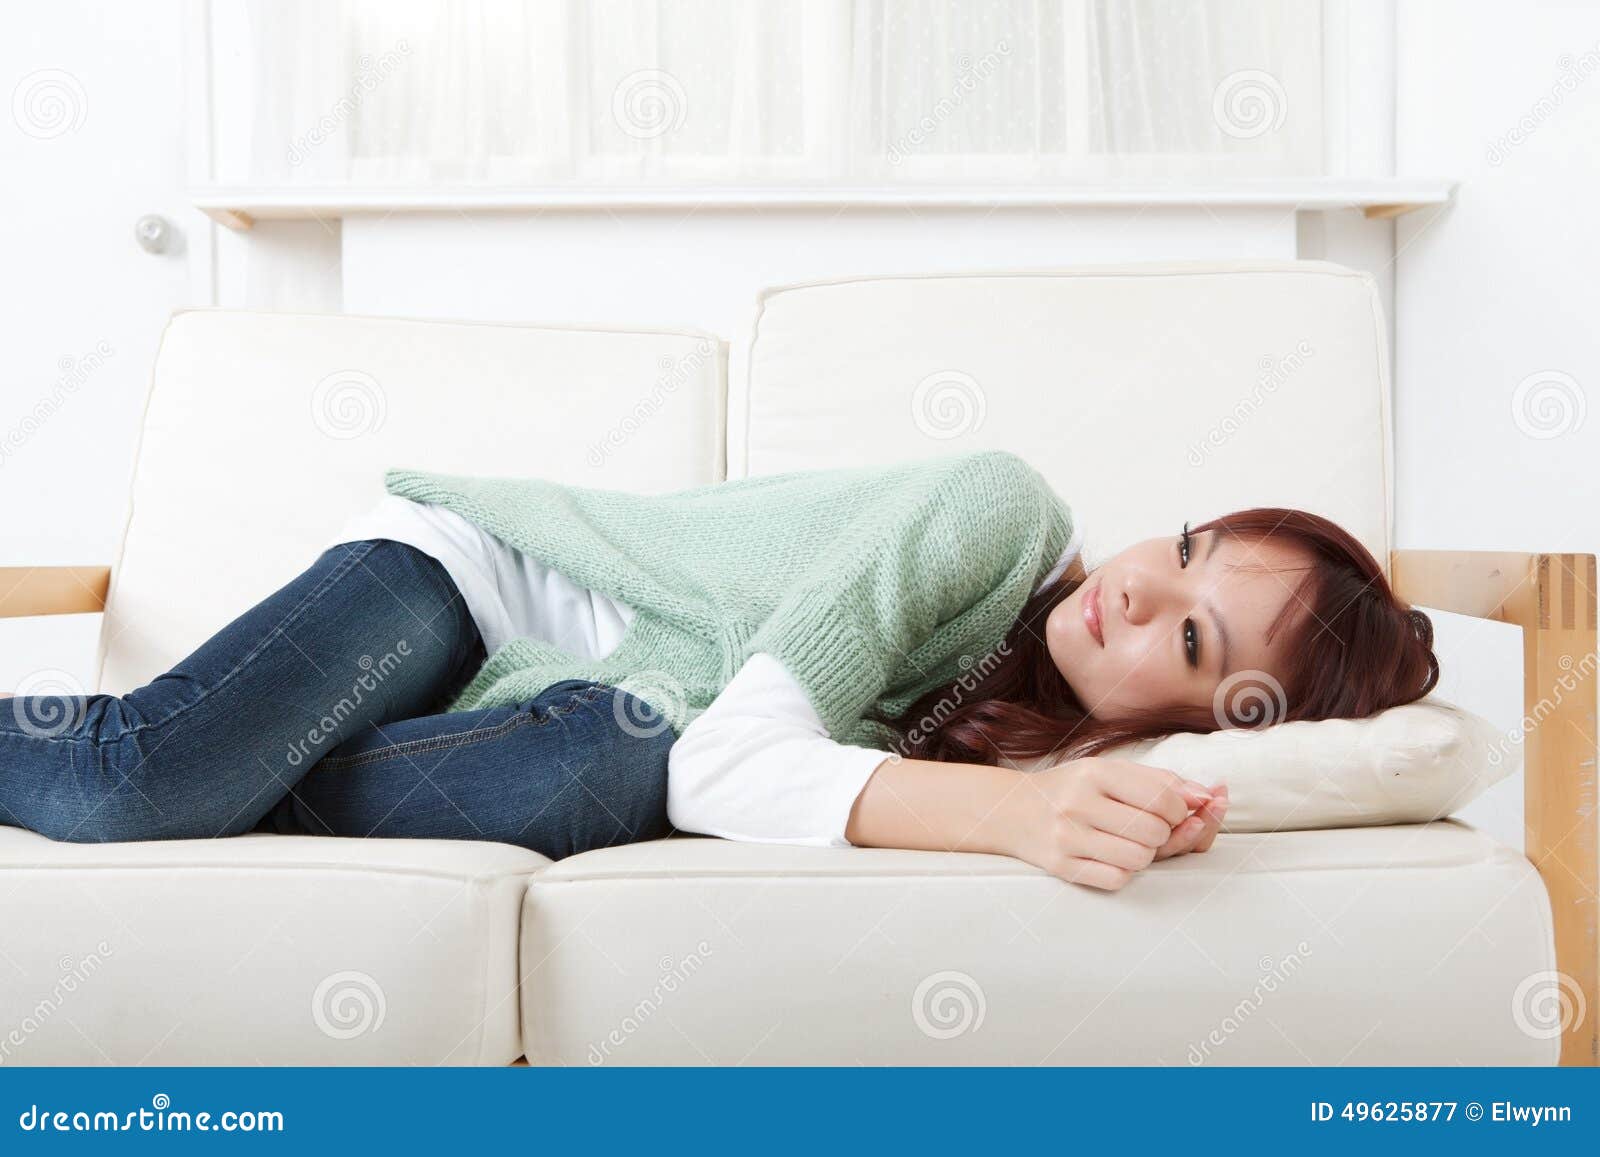 Sleeping Girl Stock Image Image Of Lady Natural Home 49625877